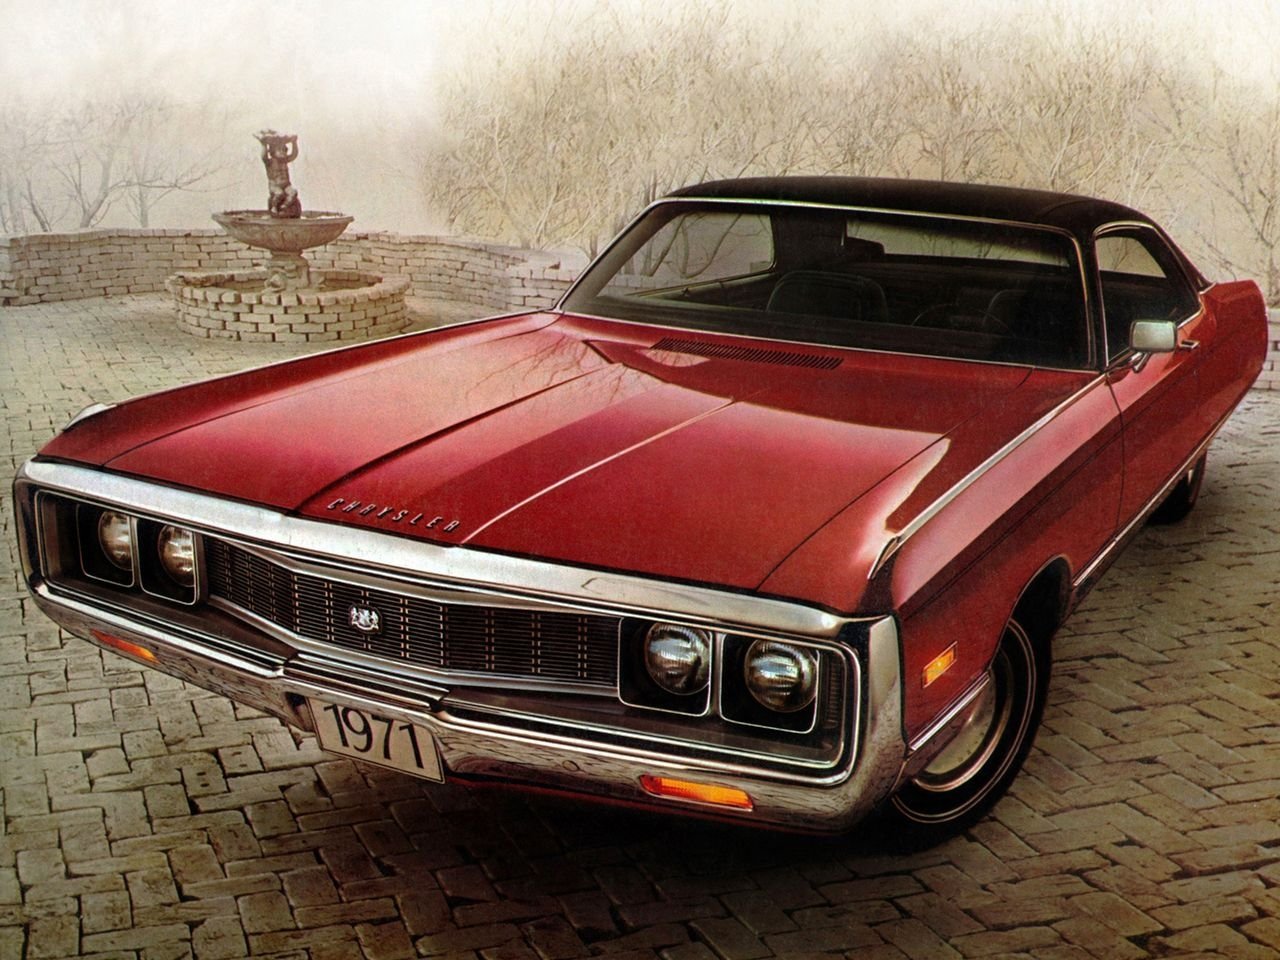 Американский автомобиль 7 букв. Chrysler 1971. Chrysler New Yorker 1971. Крайслер Нью йоркер 1971 Coupe. Chrysler Newport 1971.